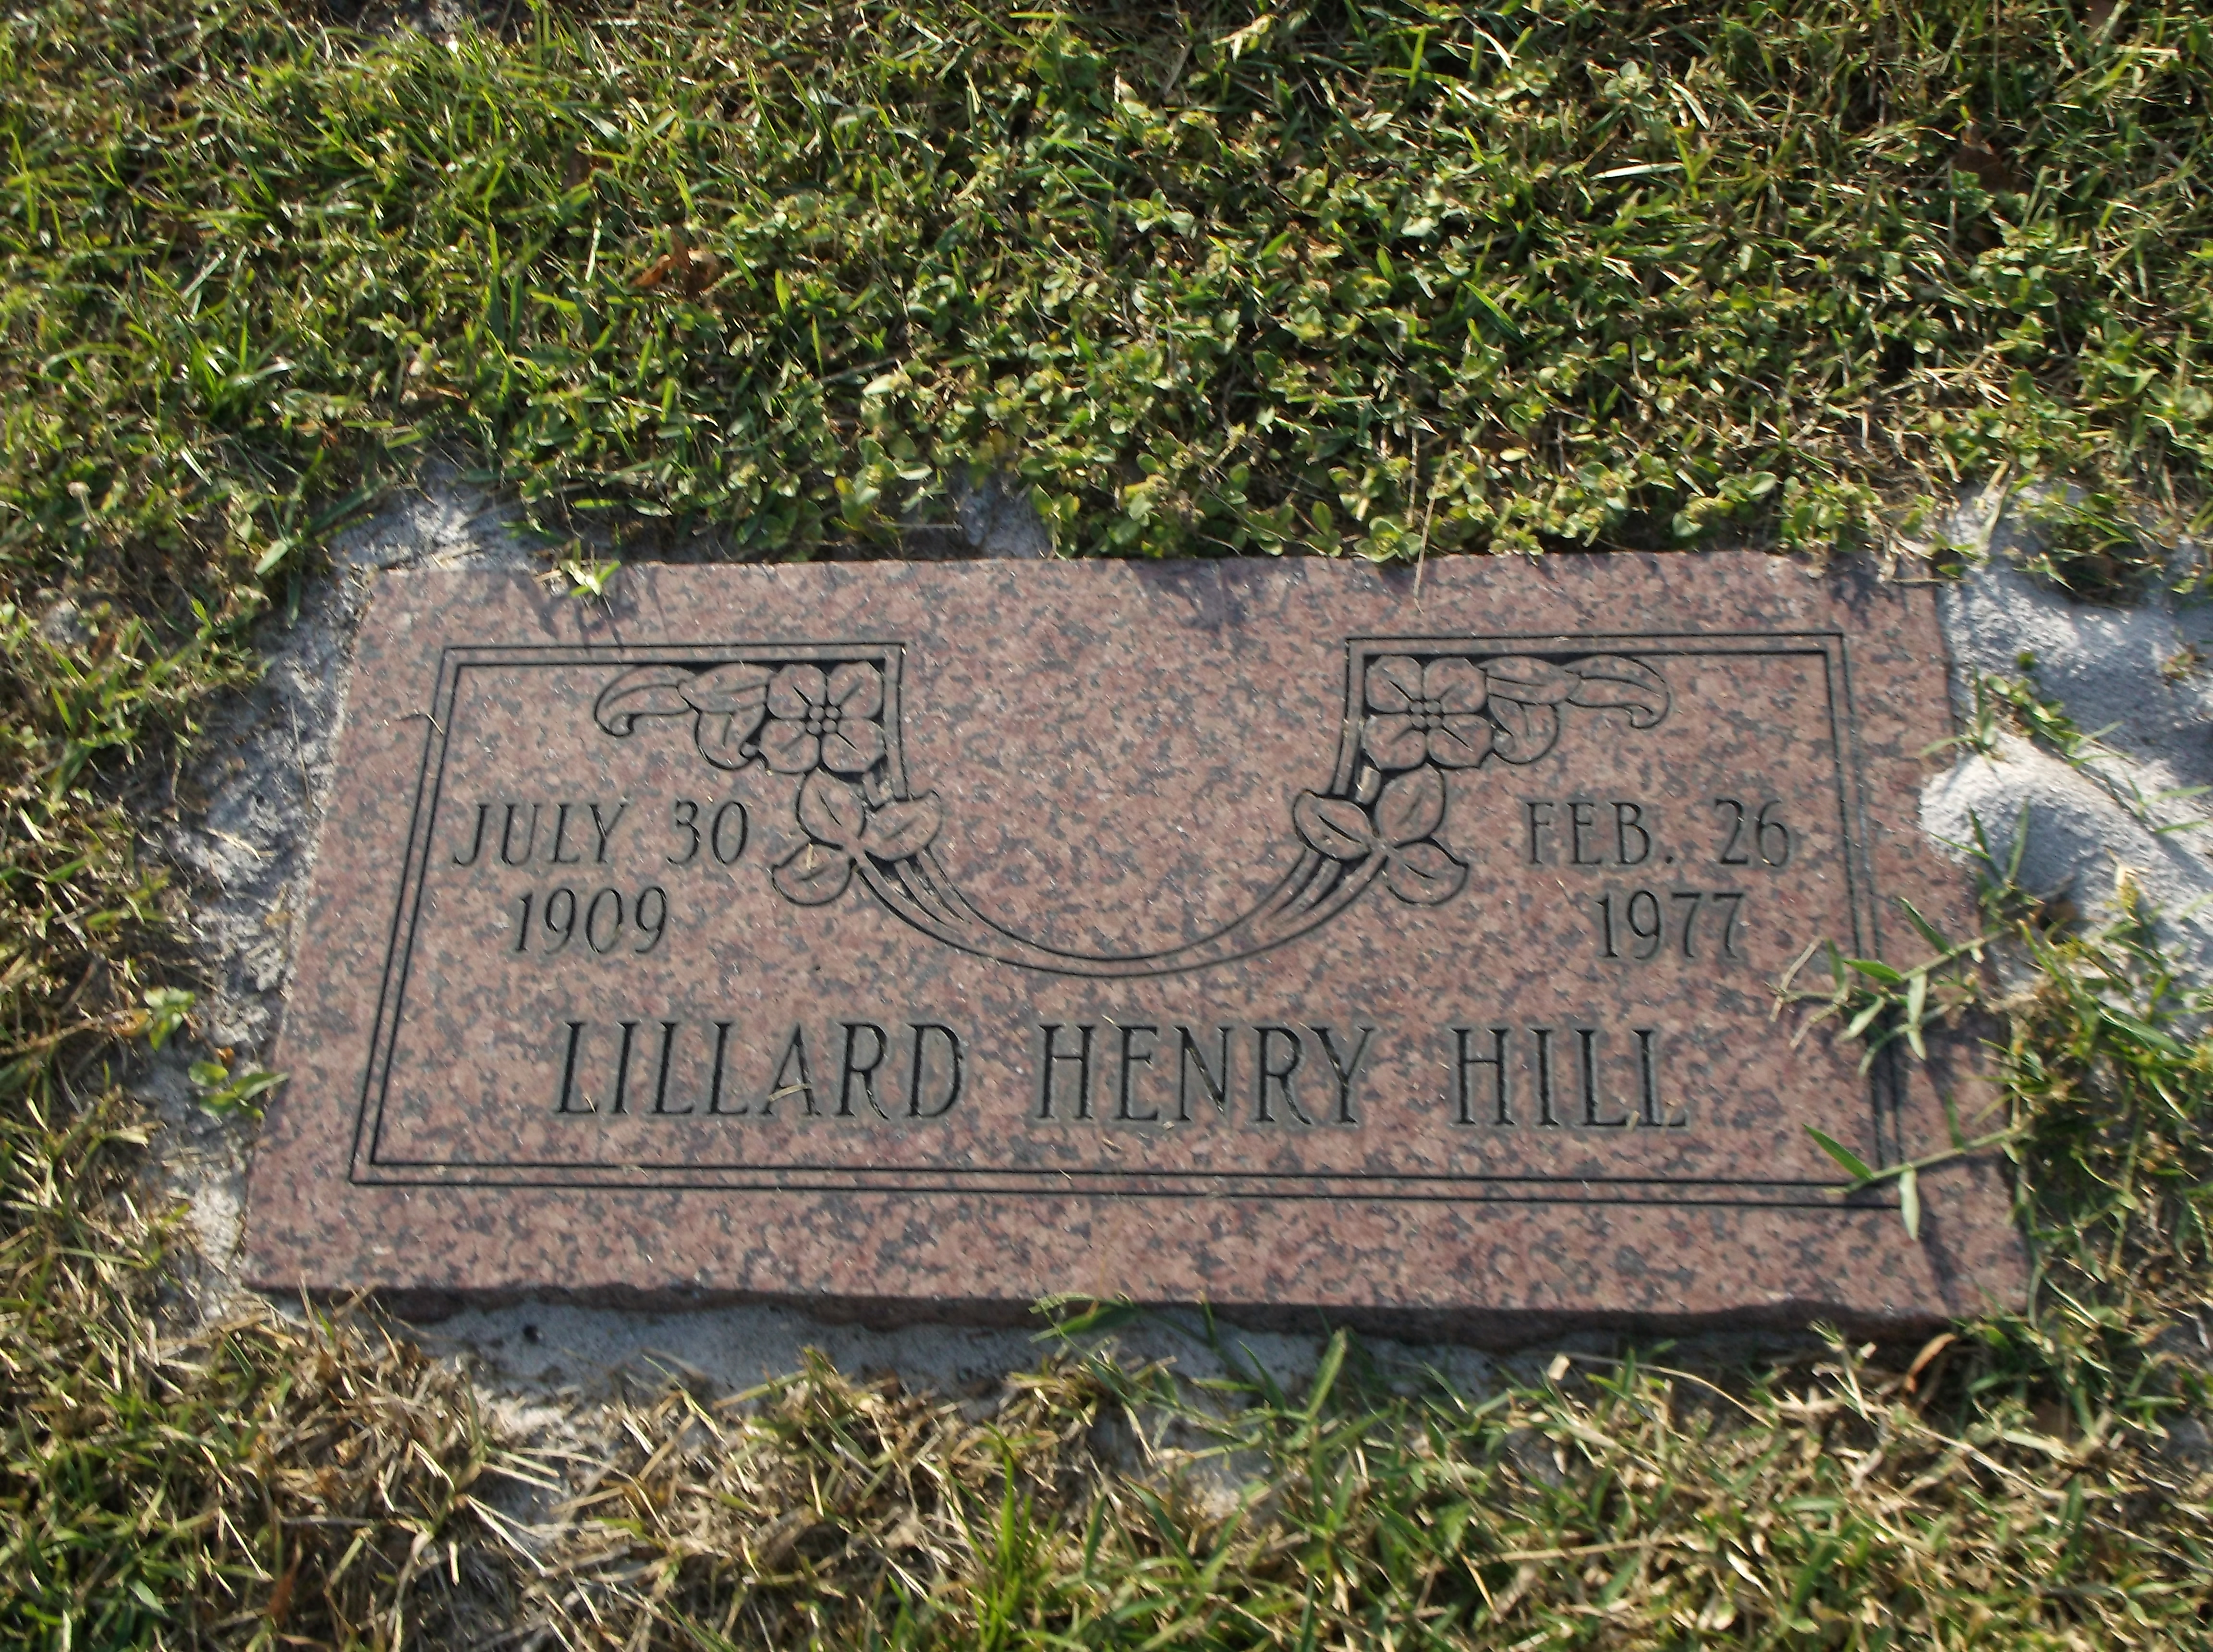 Lillard Henry Hill